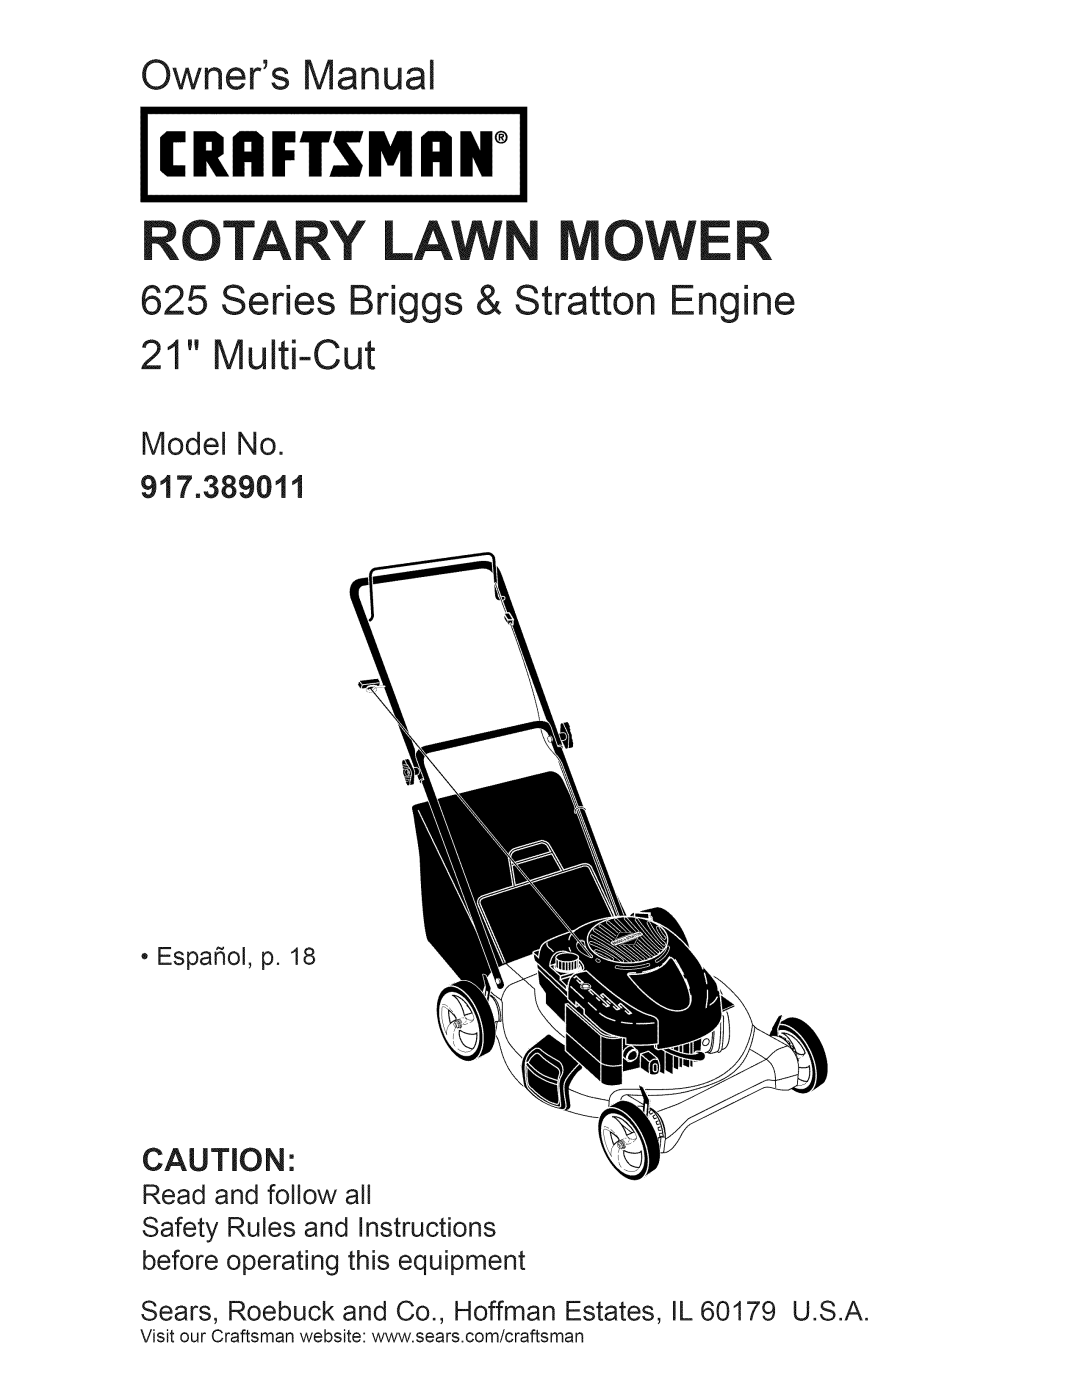 Craftsman manual Model No 917.389011, Craftsman, Rotary Lawn Mower, Owners Manual 